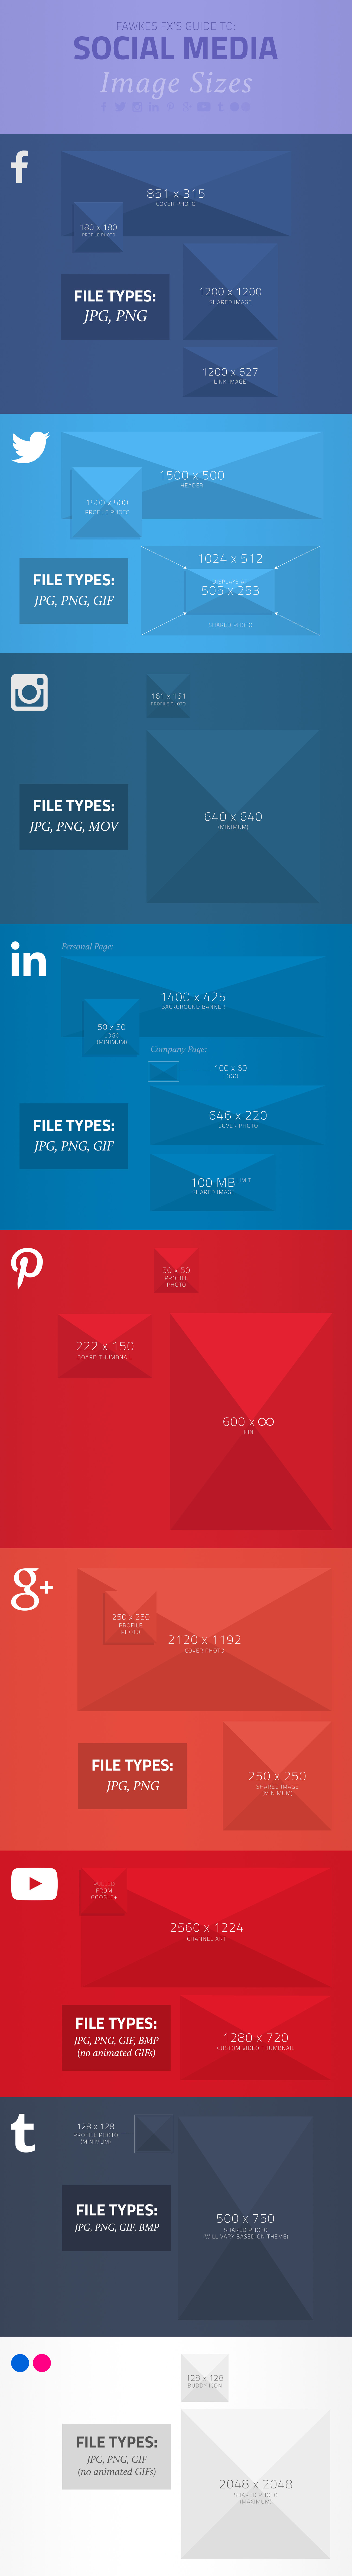 Ideal social media image sizes for Facebook, Twitter, Pinterest, Flickr & more!